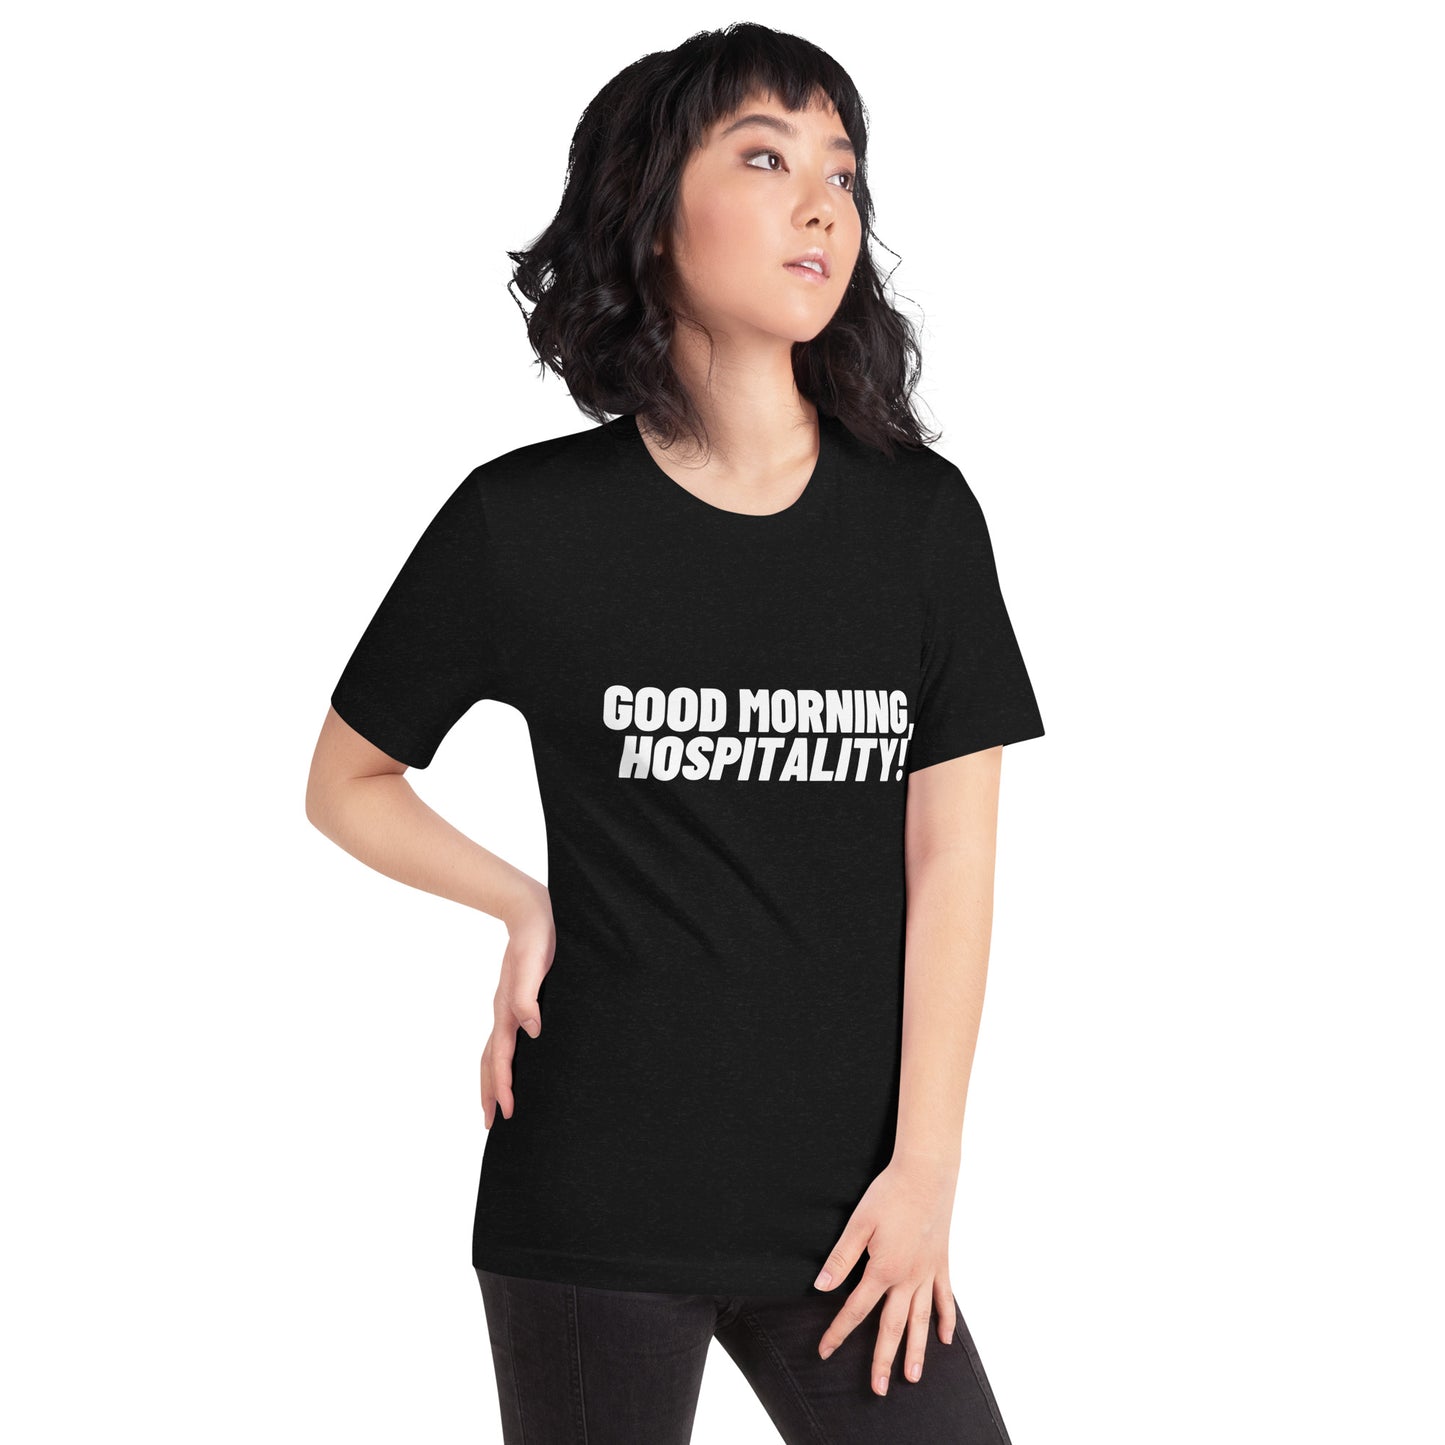 Good Morning Hospitality t-shirt